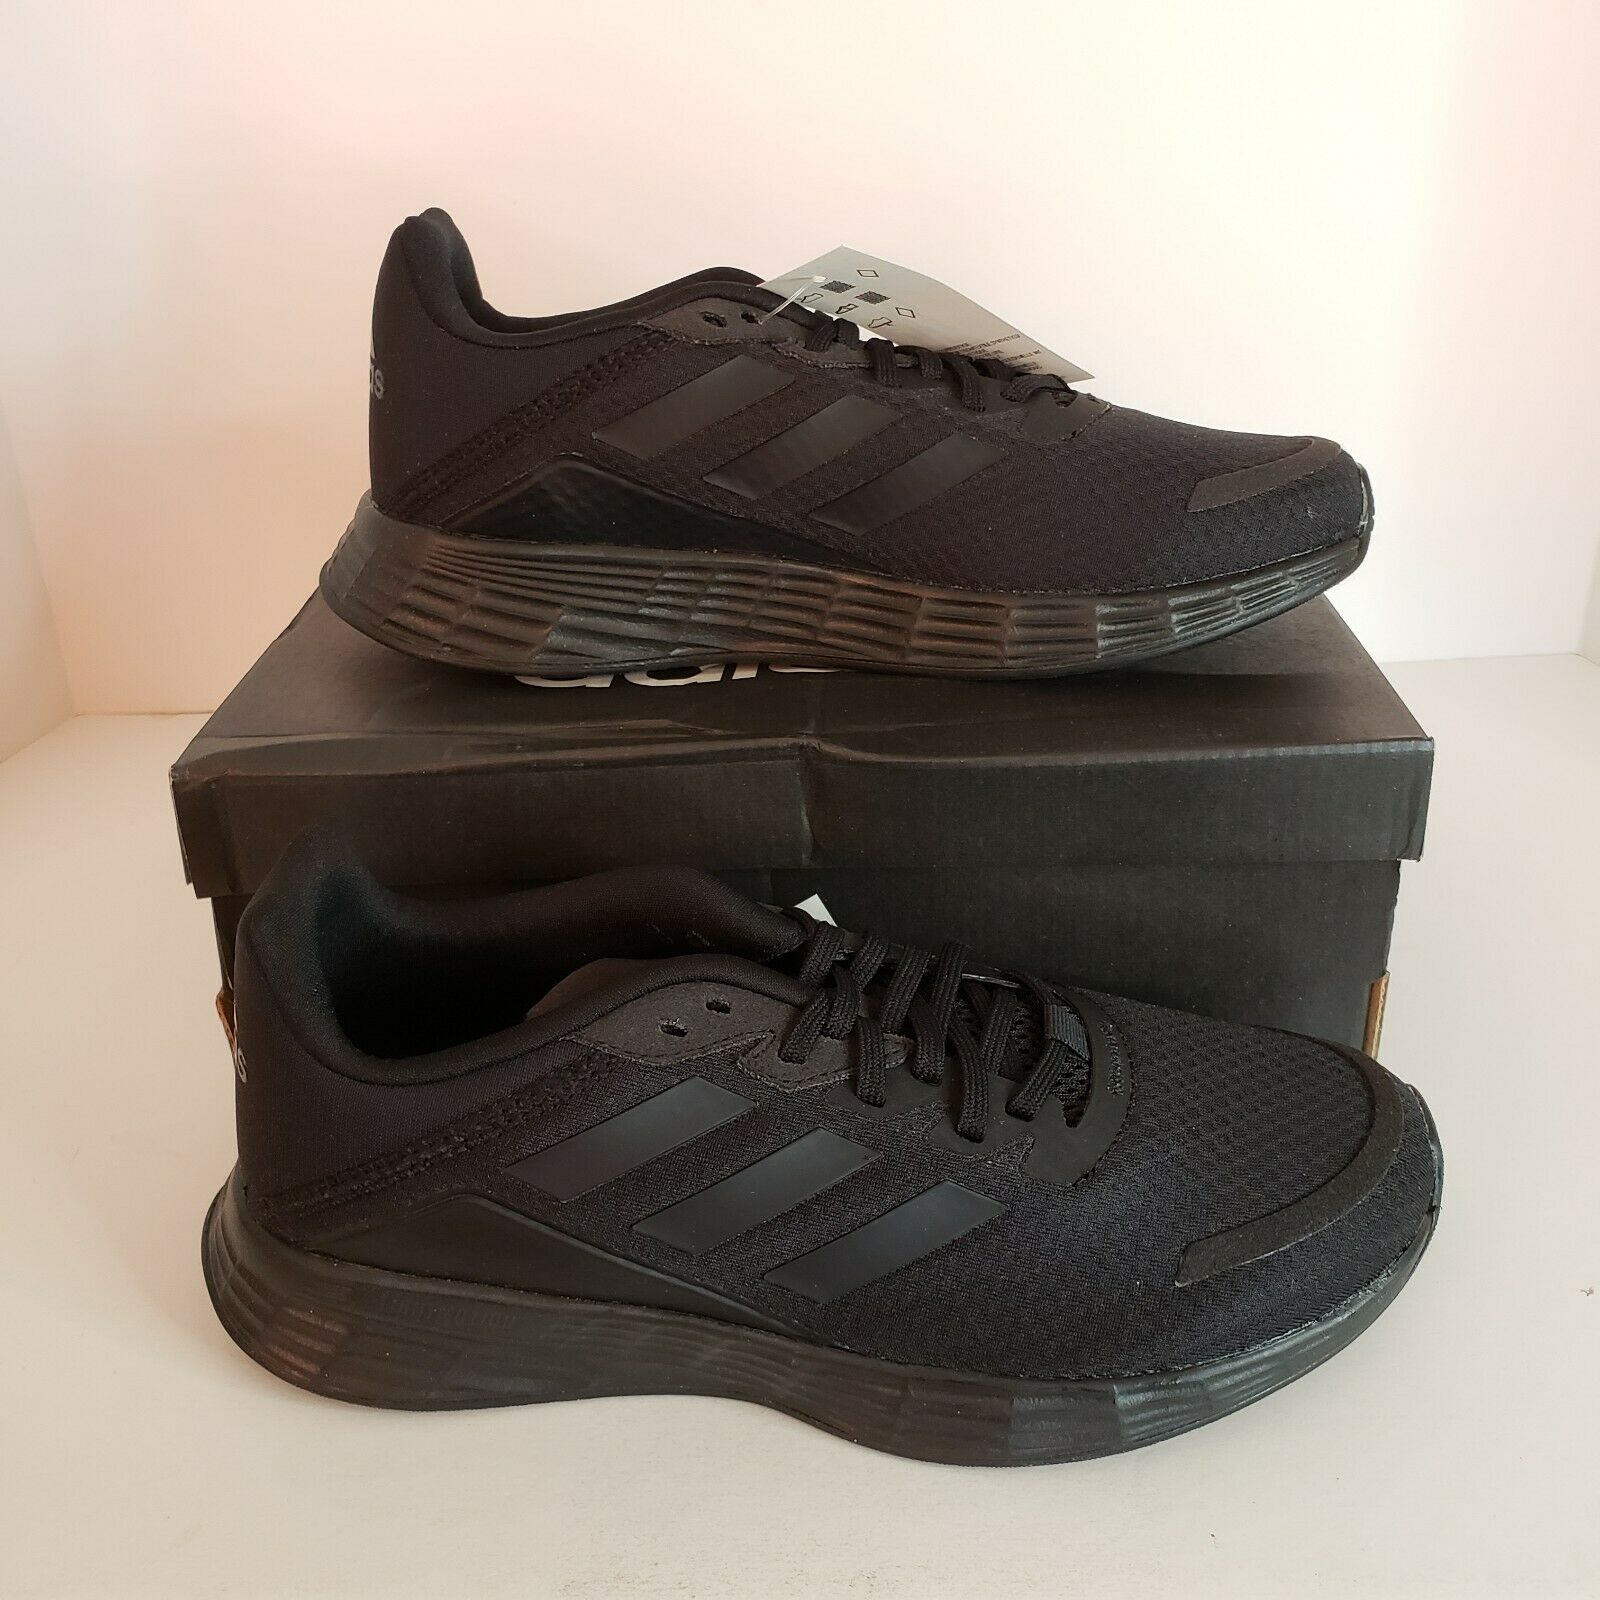 Adidas Duramo SL K Black Running Shoes Youth Boys Size 5.5 US New w/Box